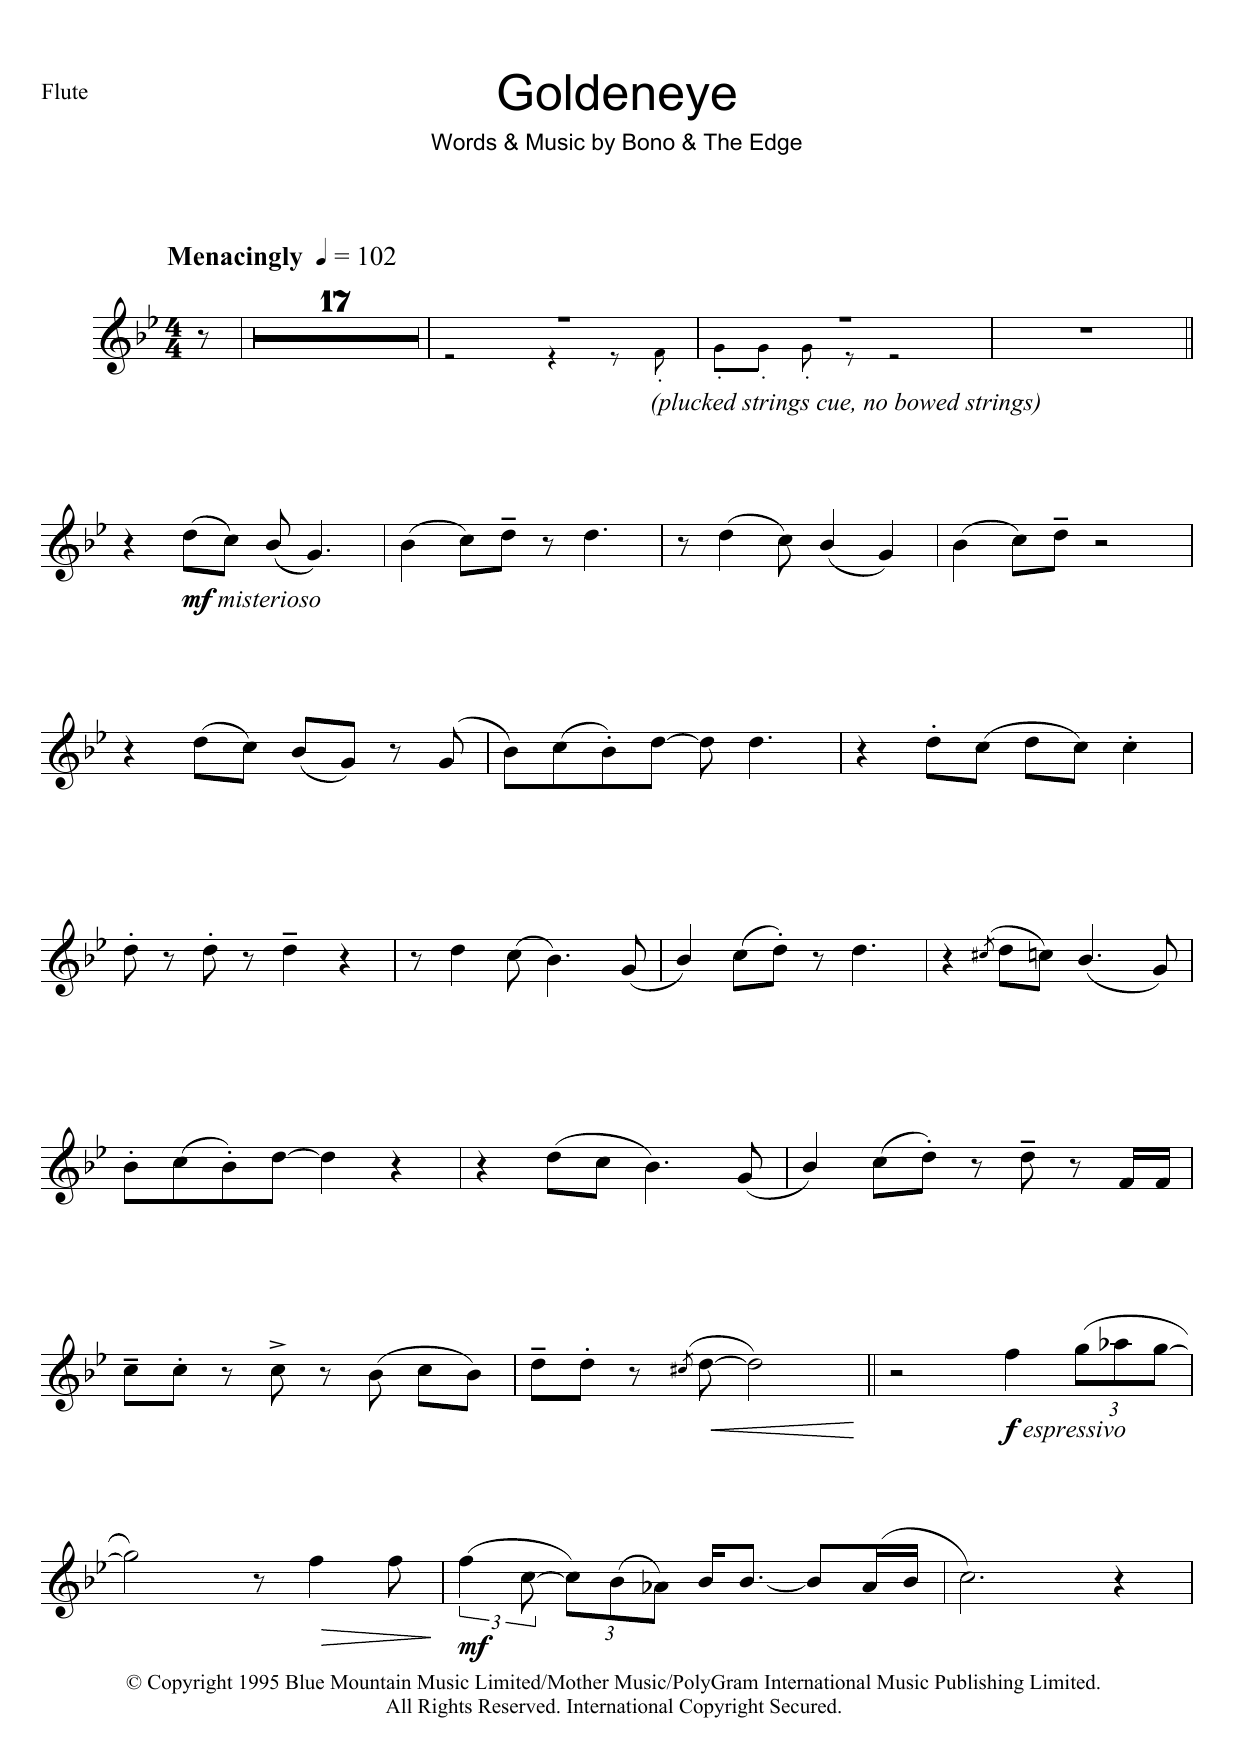 Tina Turner GoldenEye Sheet Music Notes & Chords for Flute - Download or Print PDF